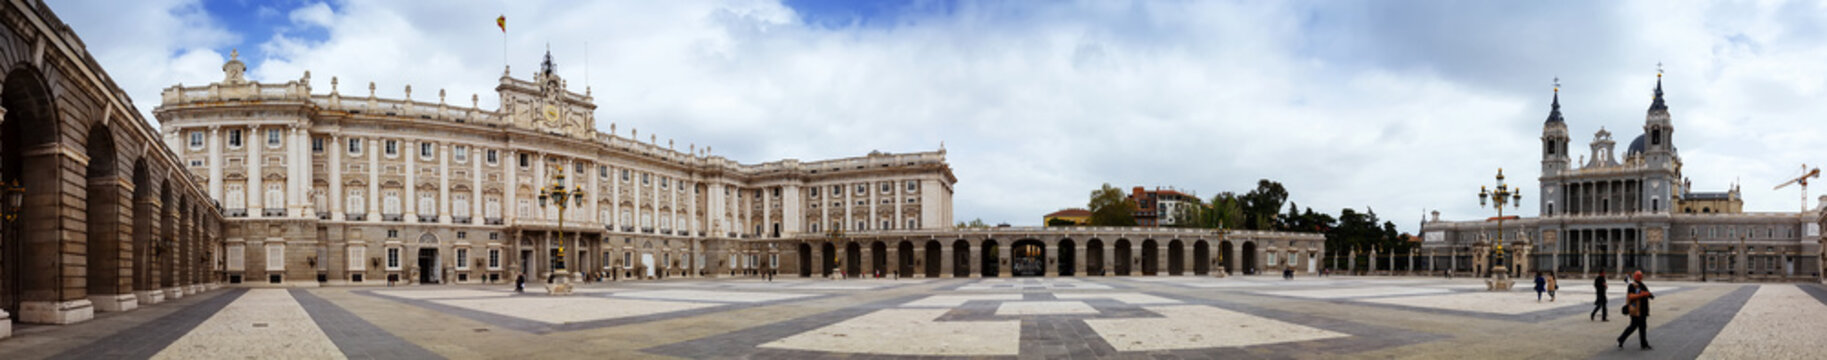 Panorama of Royal Palace of Madrid